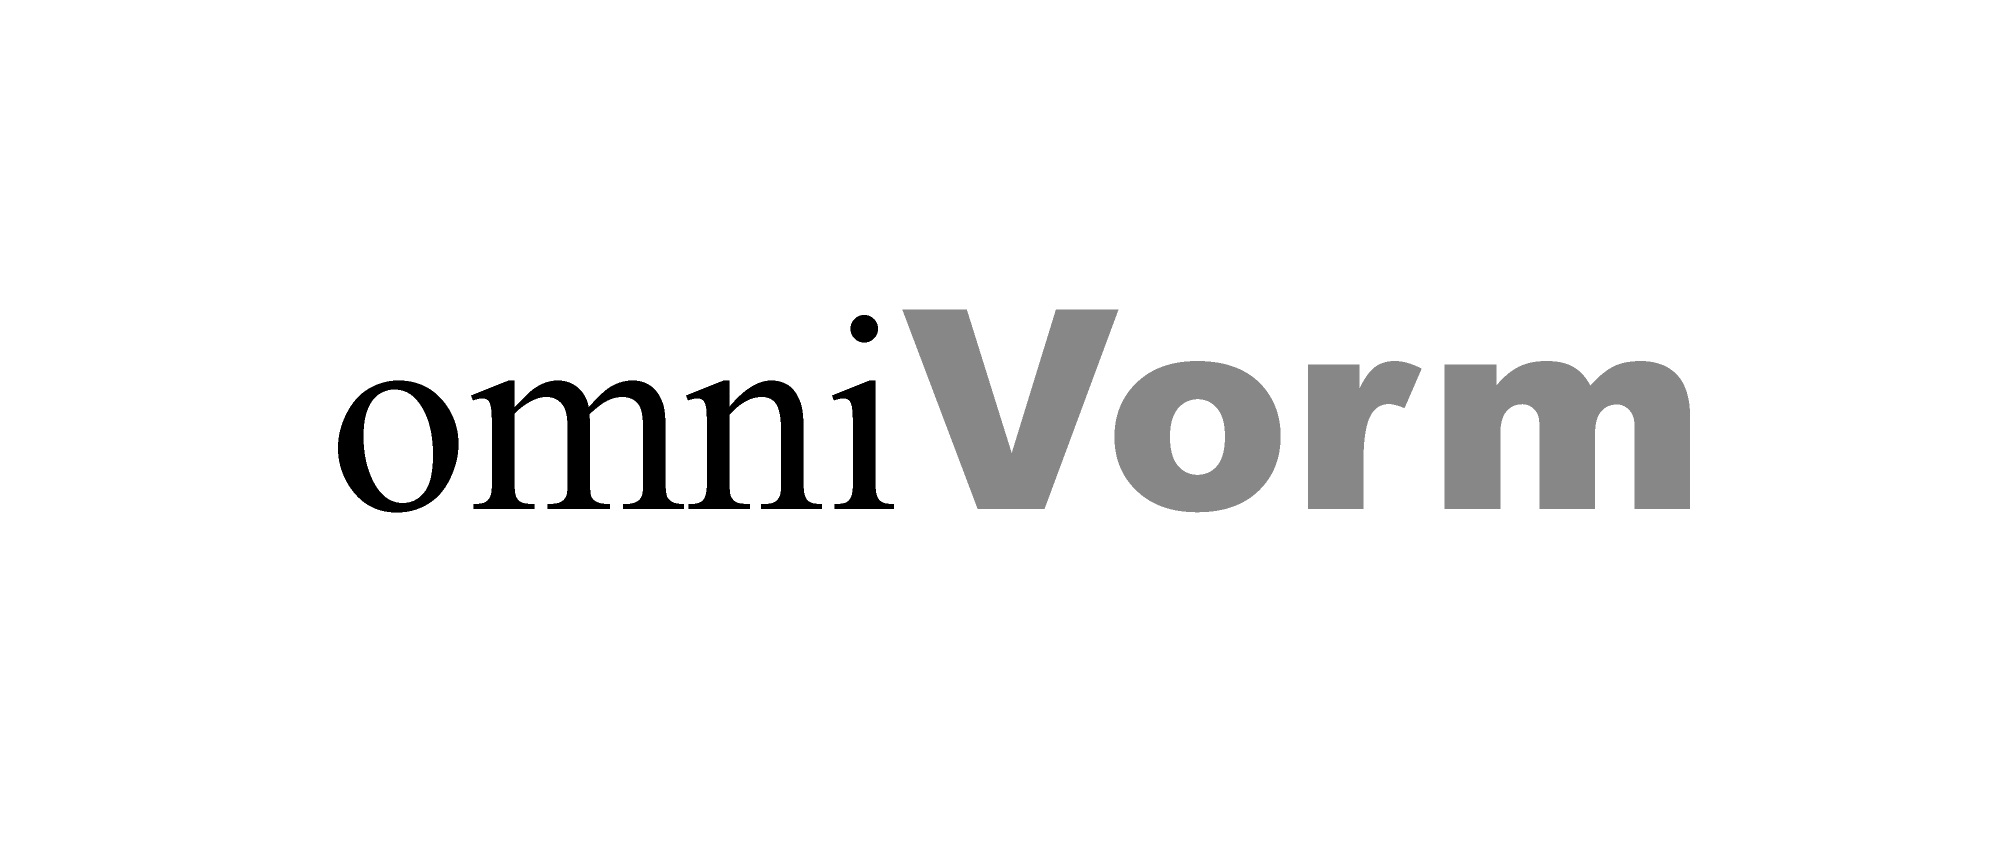 omniVorm-logo